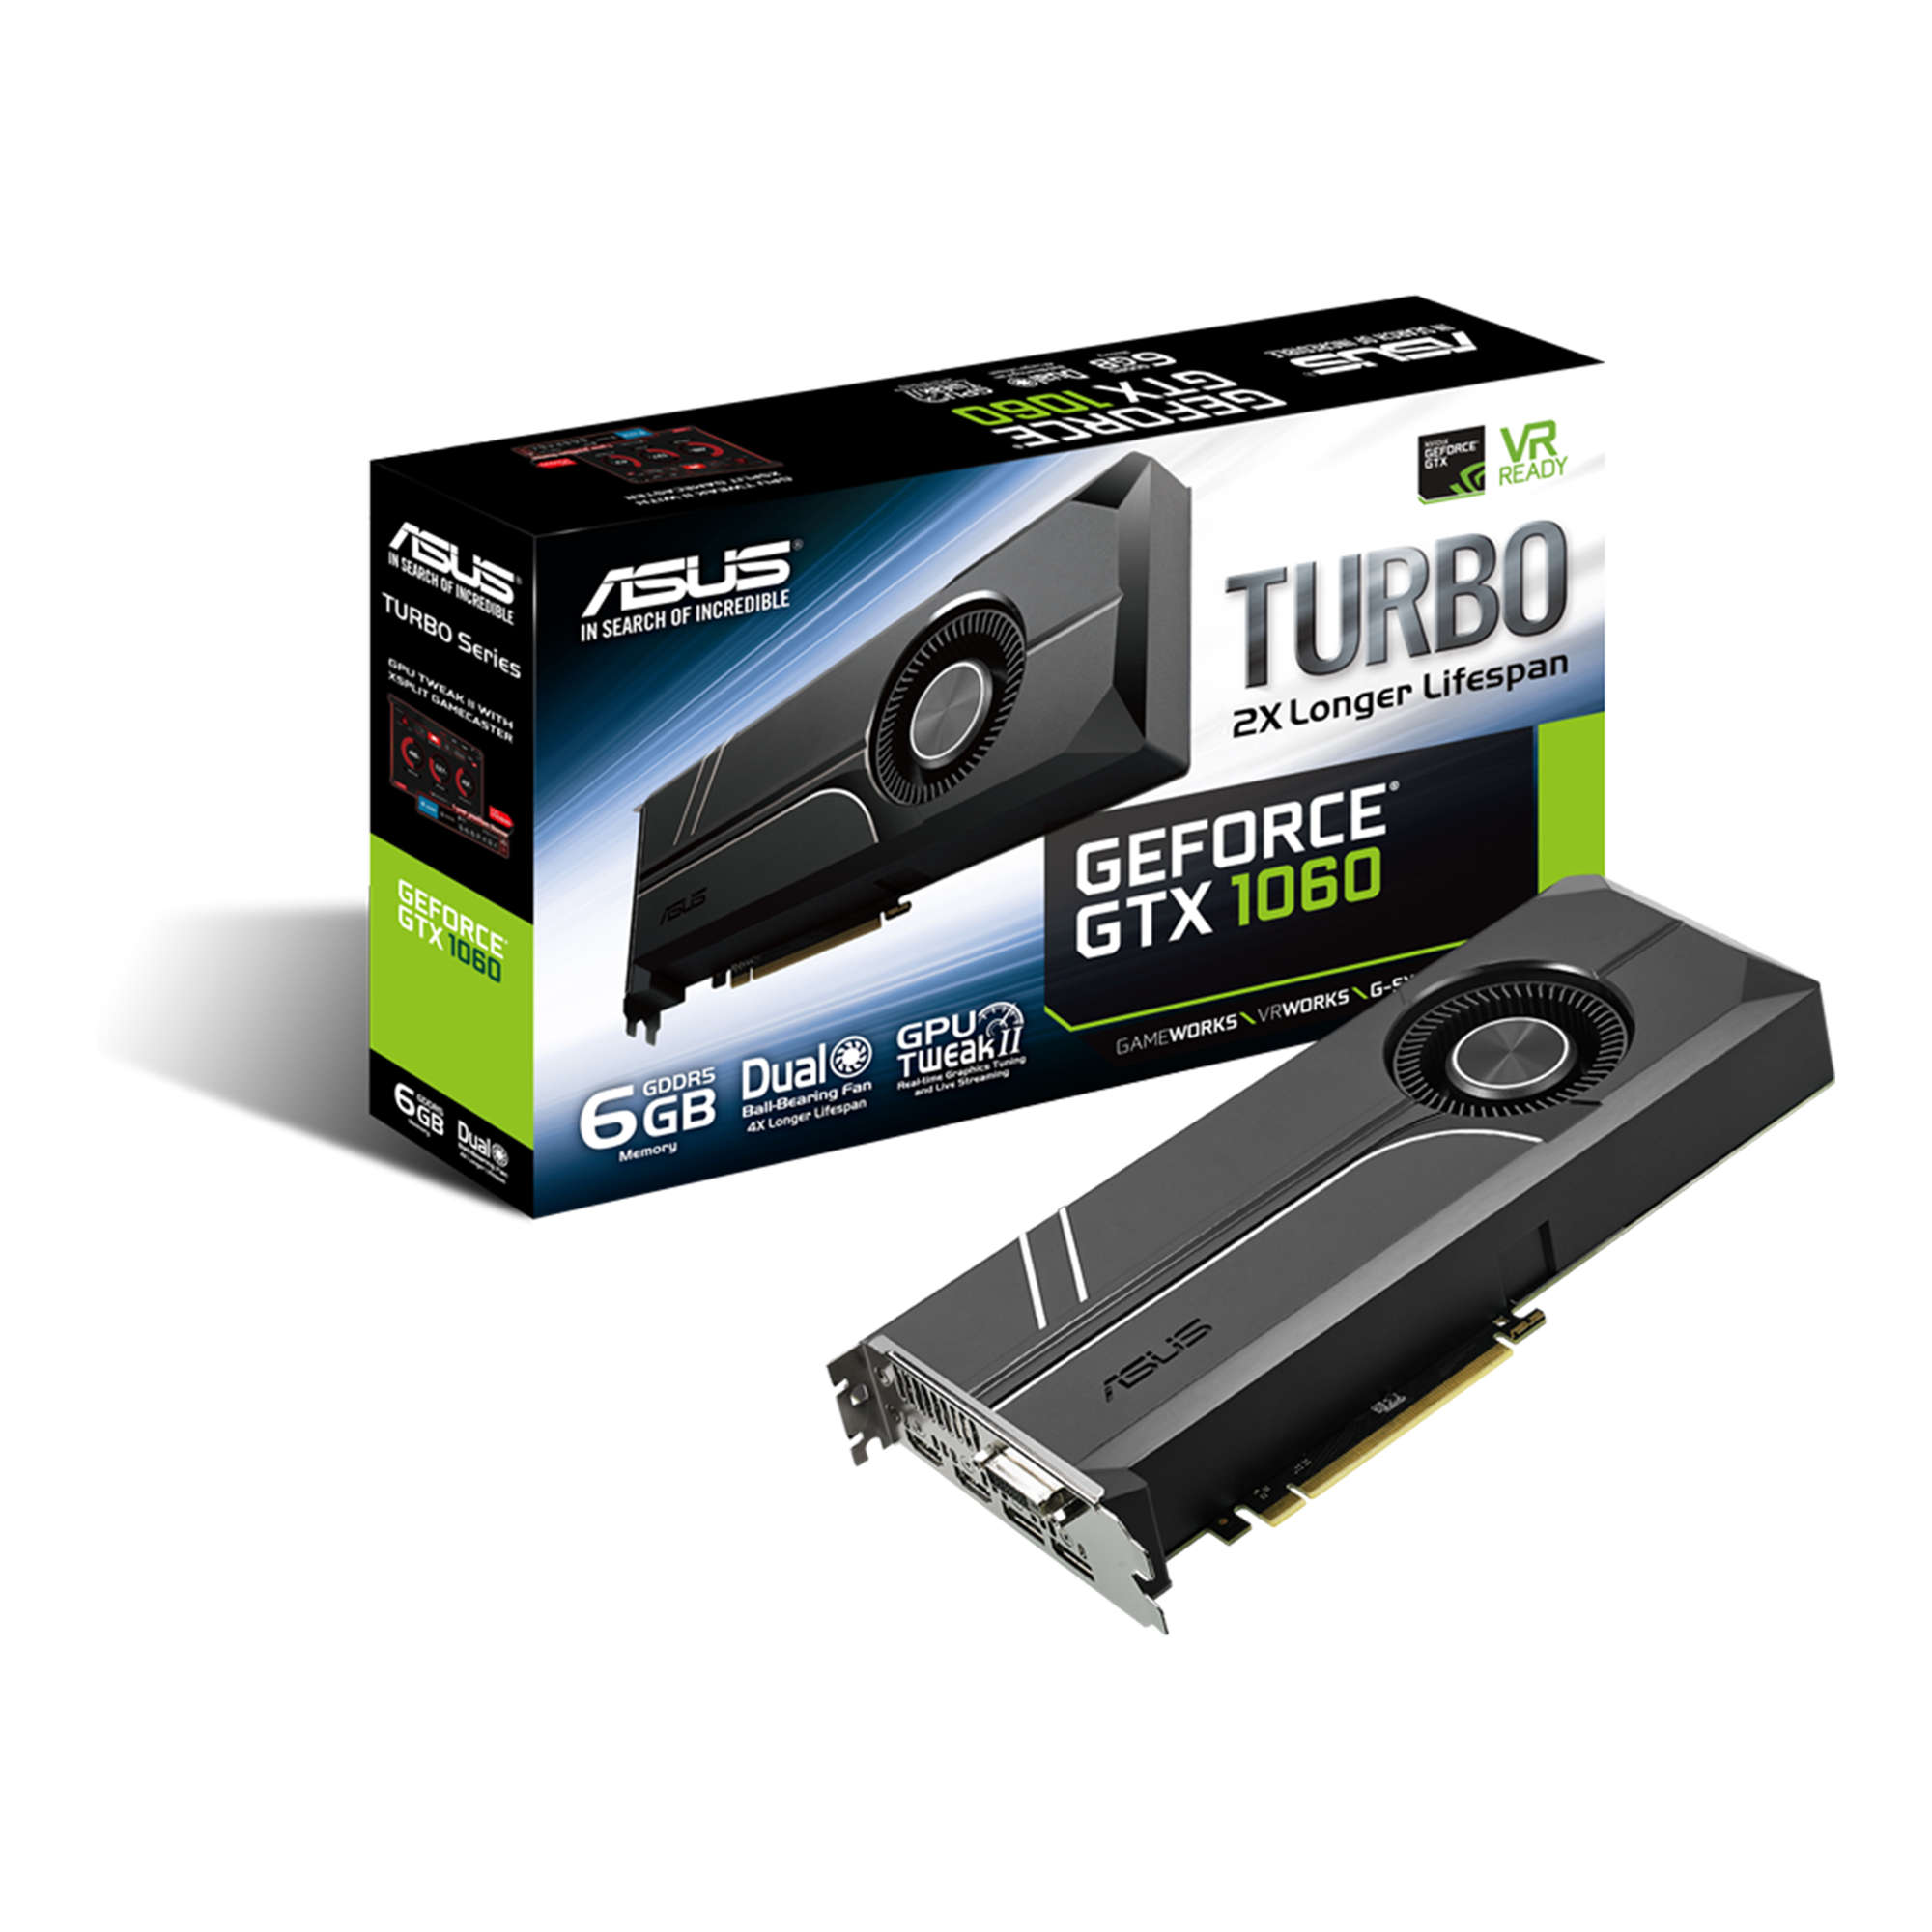 Nvidia Geforce Gtx 1060 6gb Caracteristicas | tyello.com